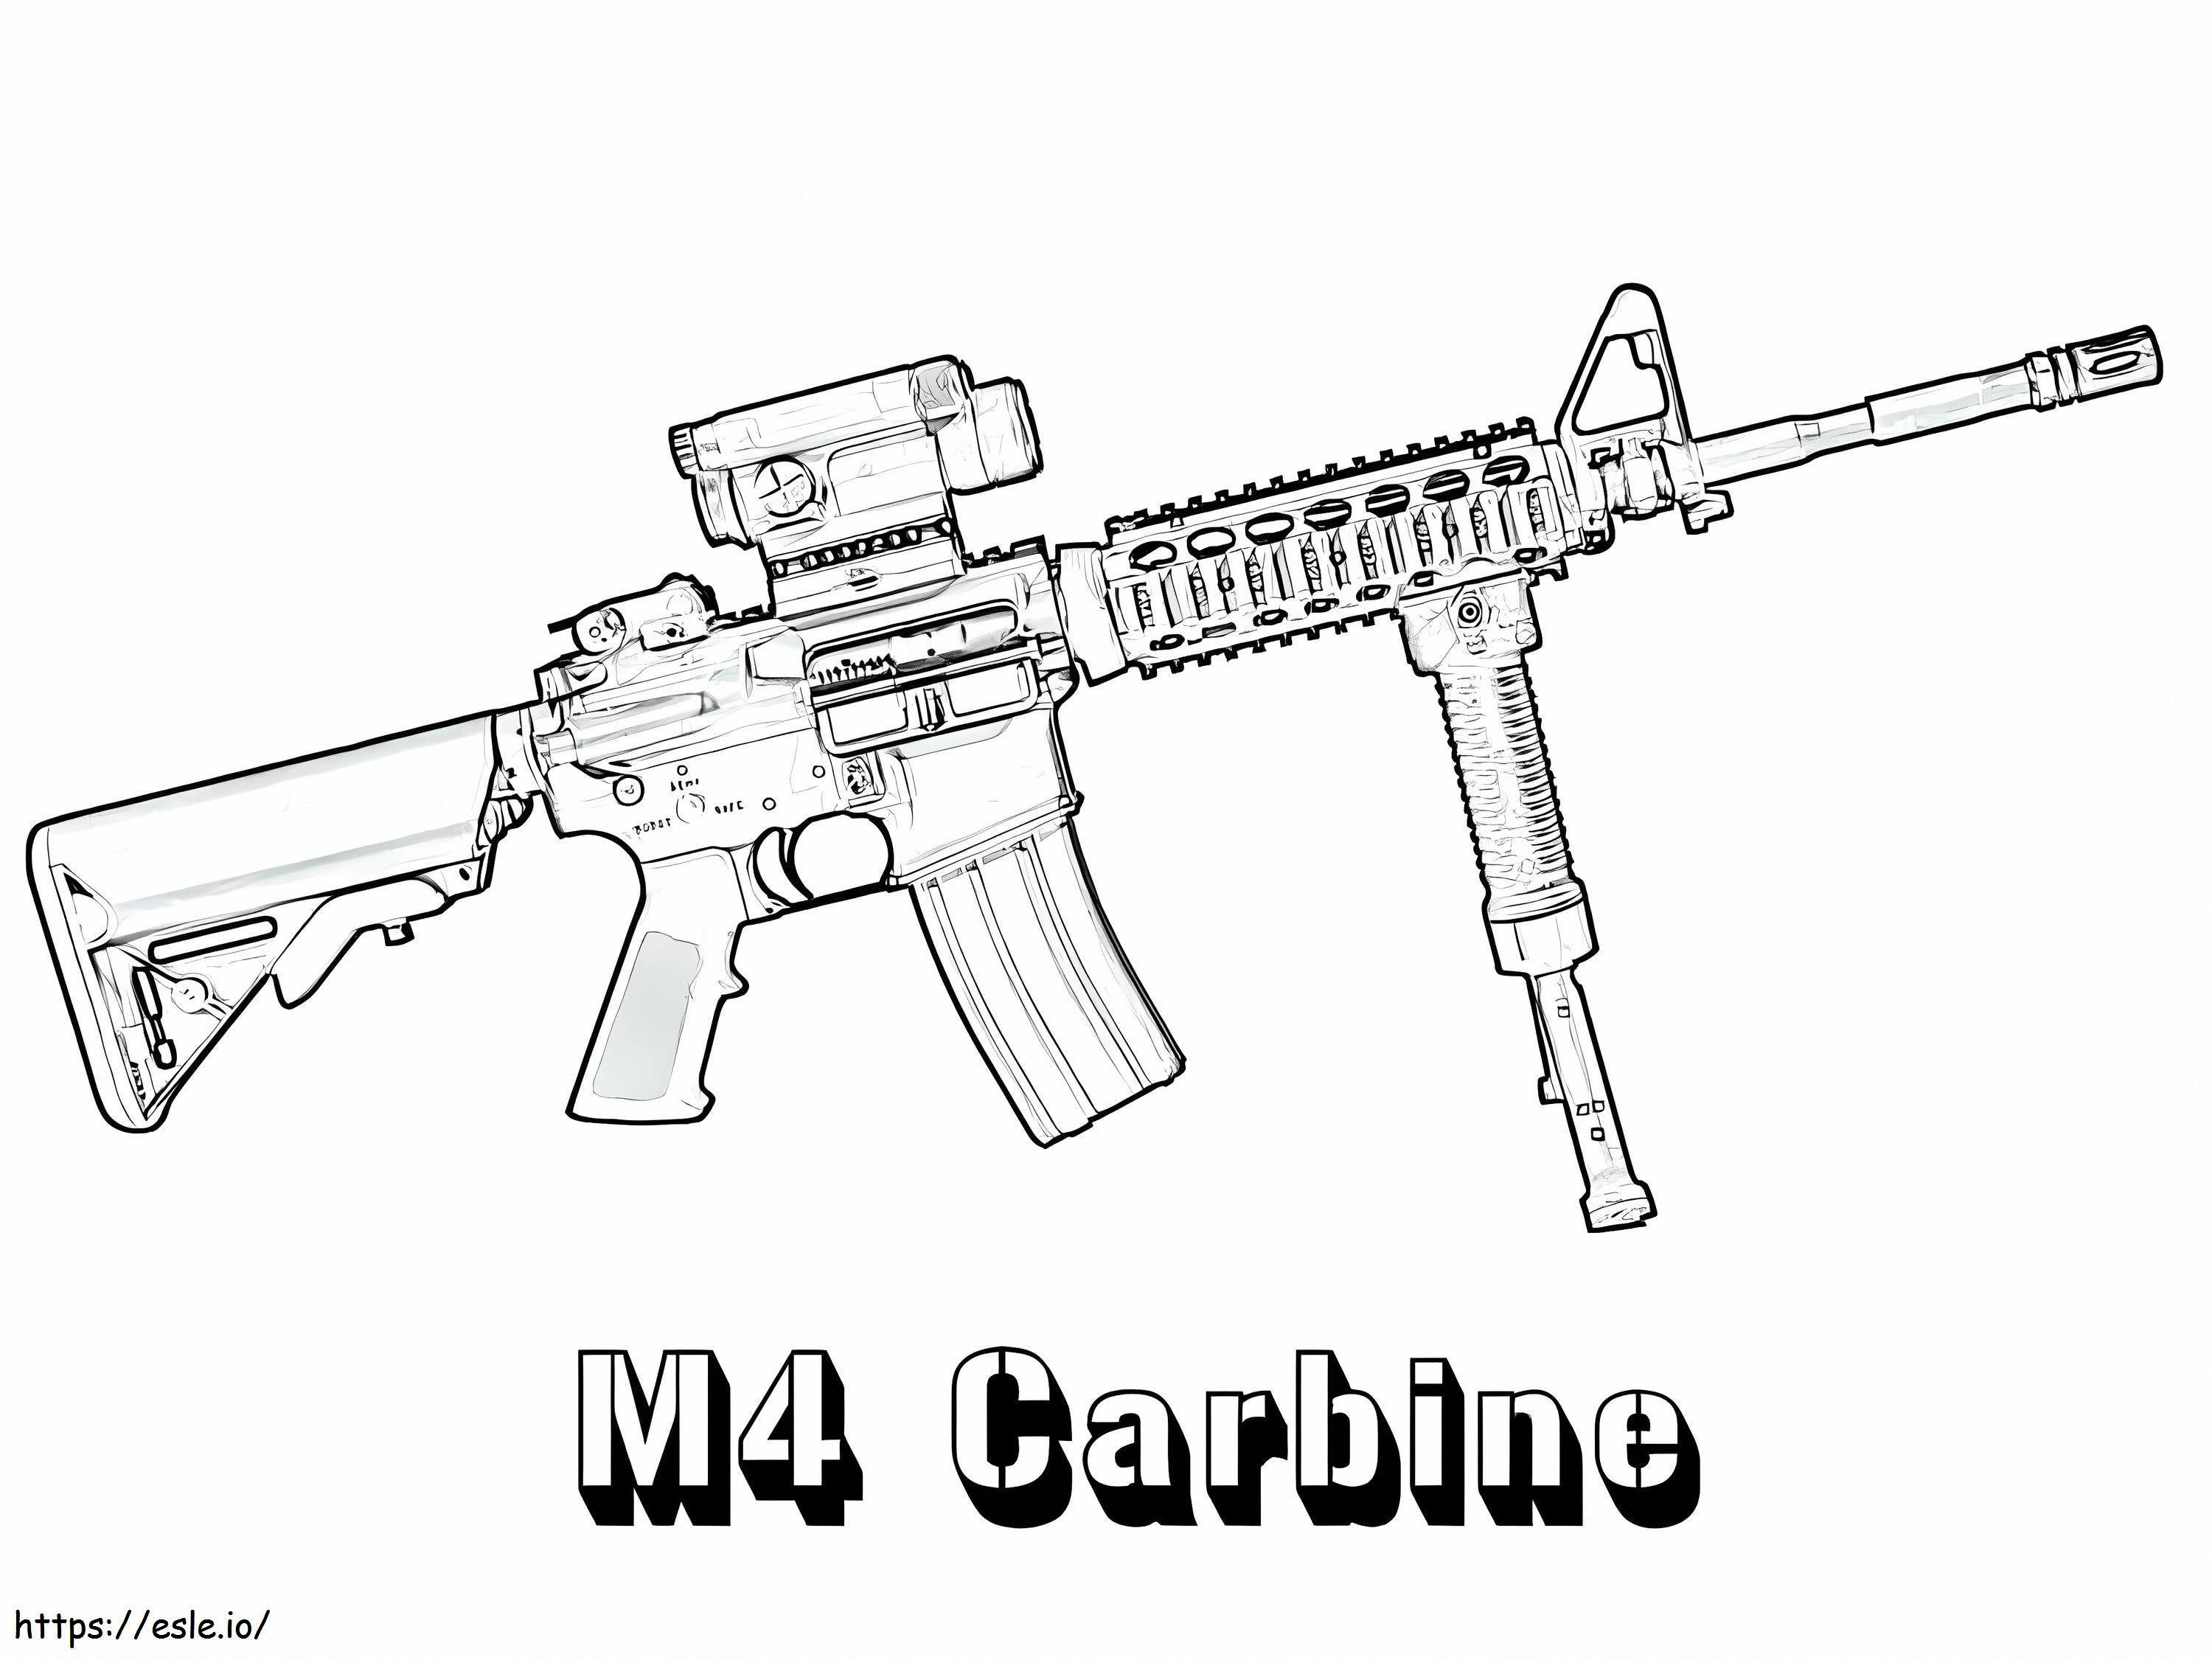 M4 Carbine coloring page